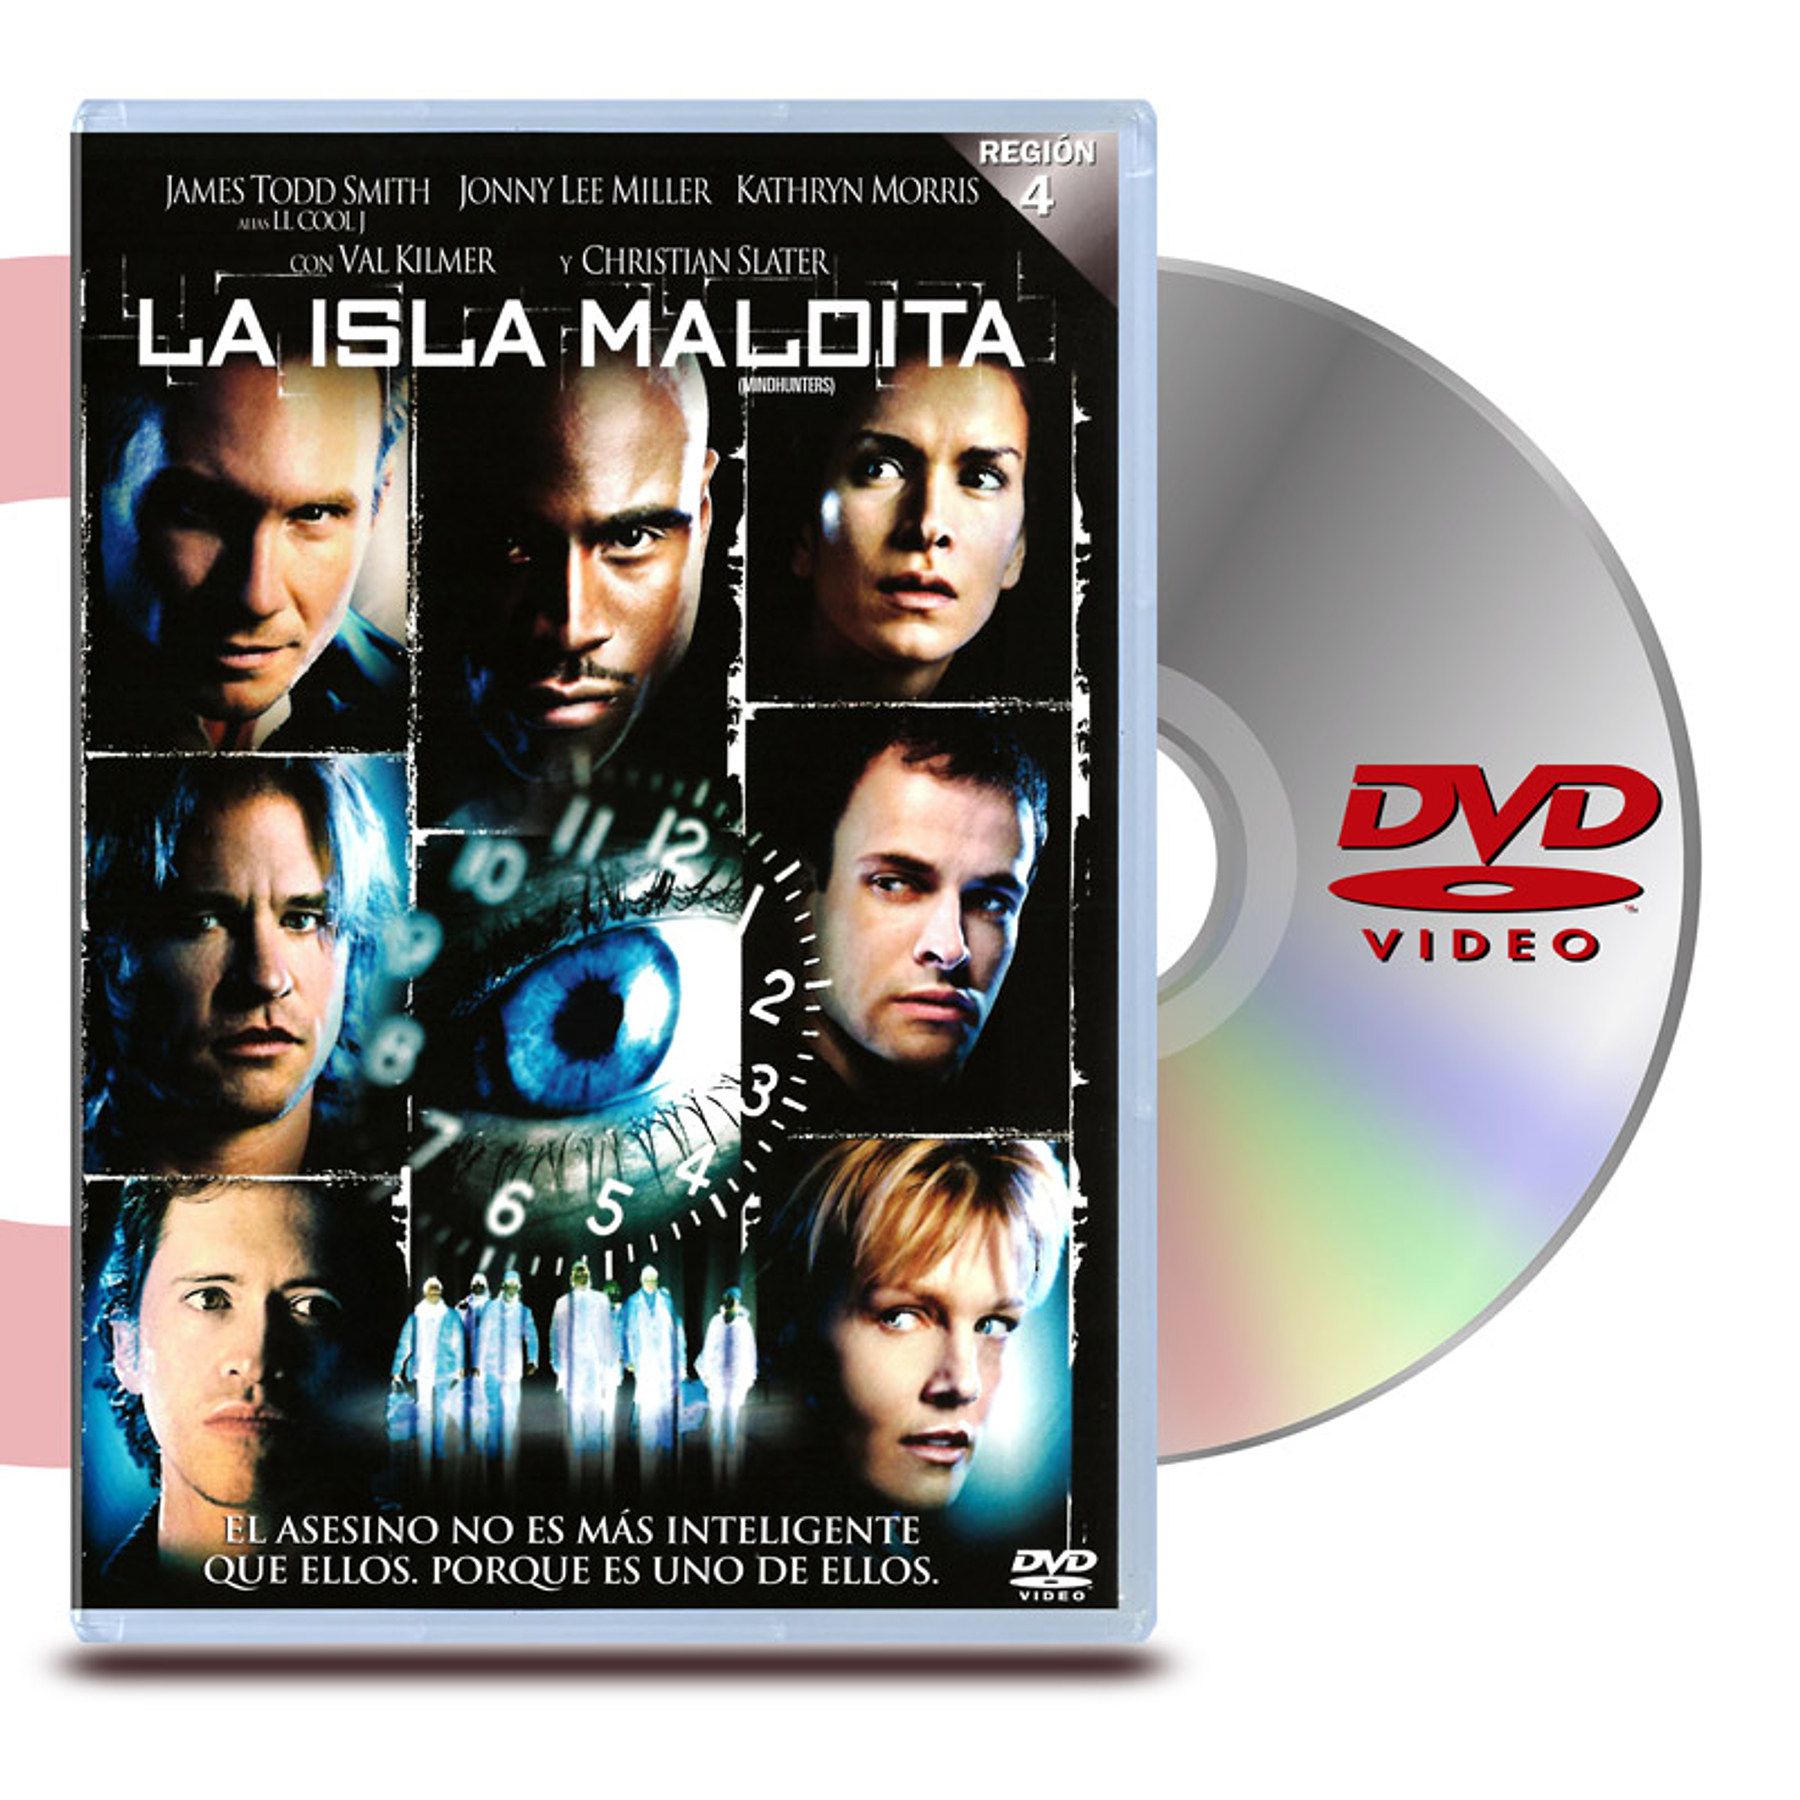 DVD La Isla Maldita